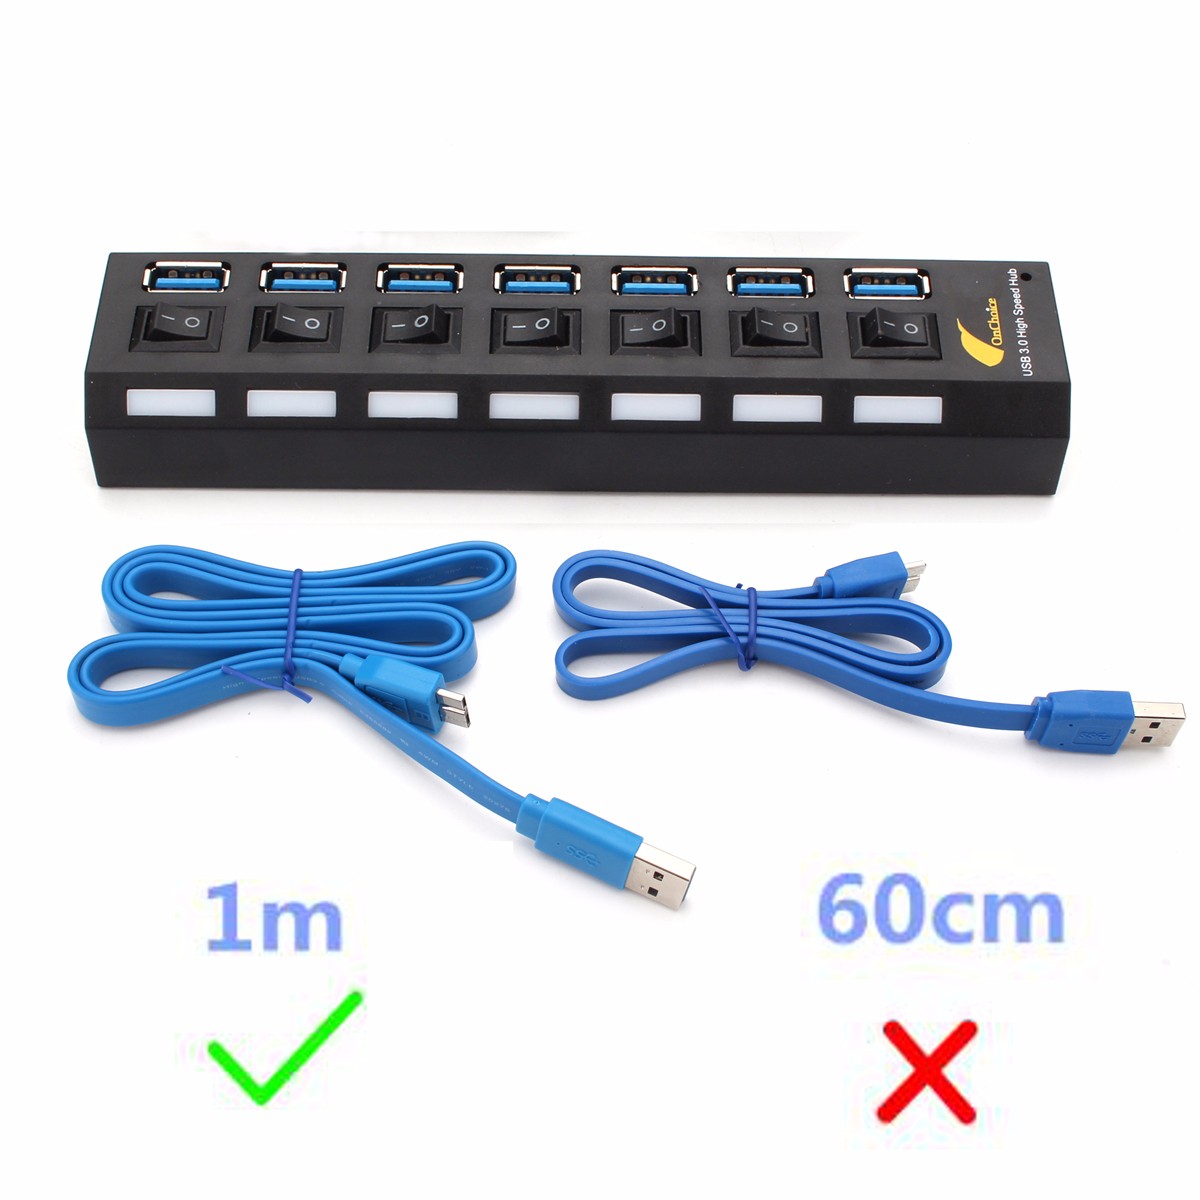 ONCHOICE 7Port USB 3.0 Hub On/Off Switch EU US UK AC Power Adapter For Laptop Desktop 46